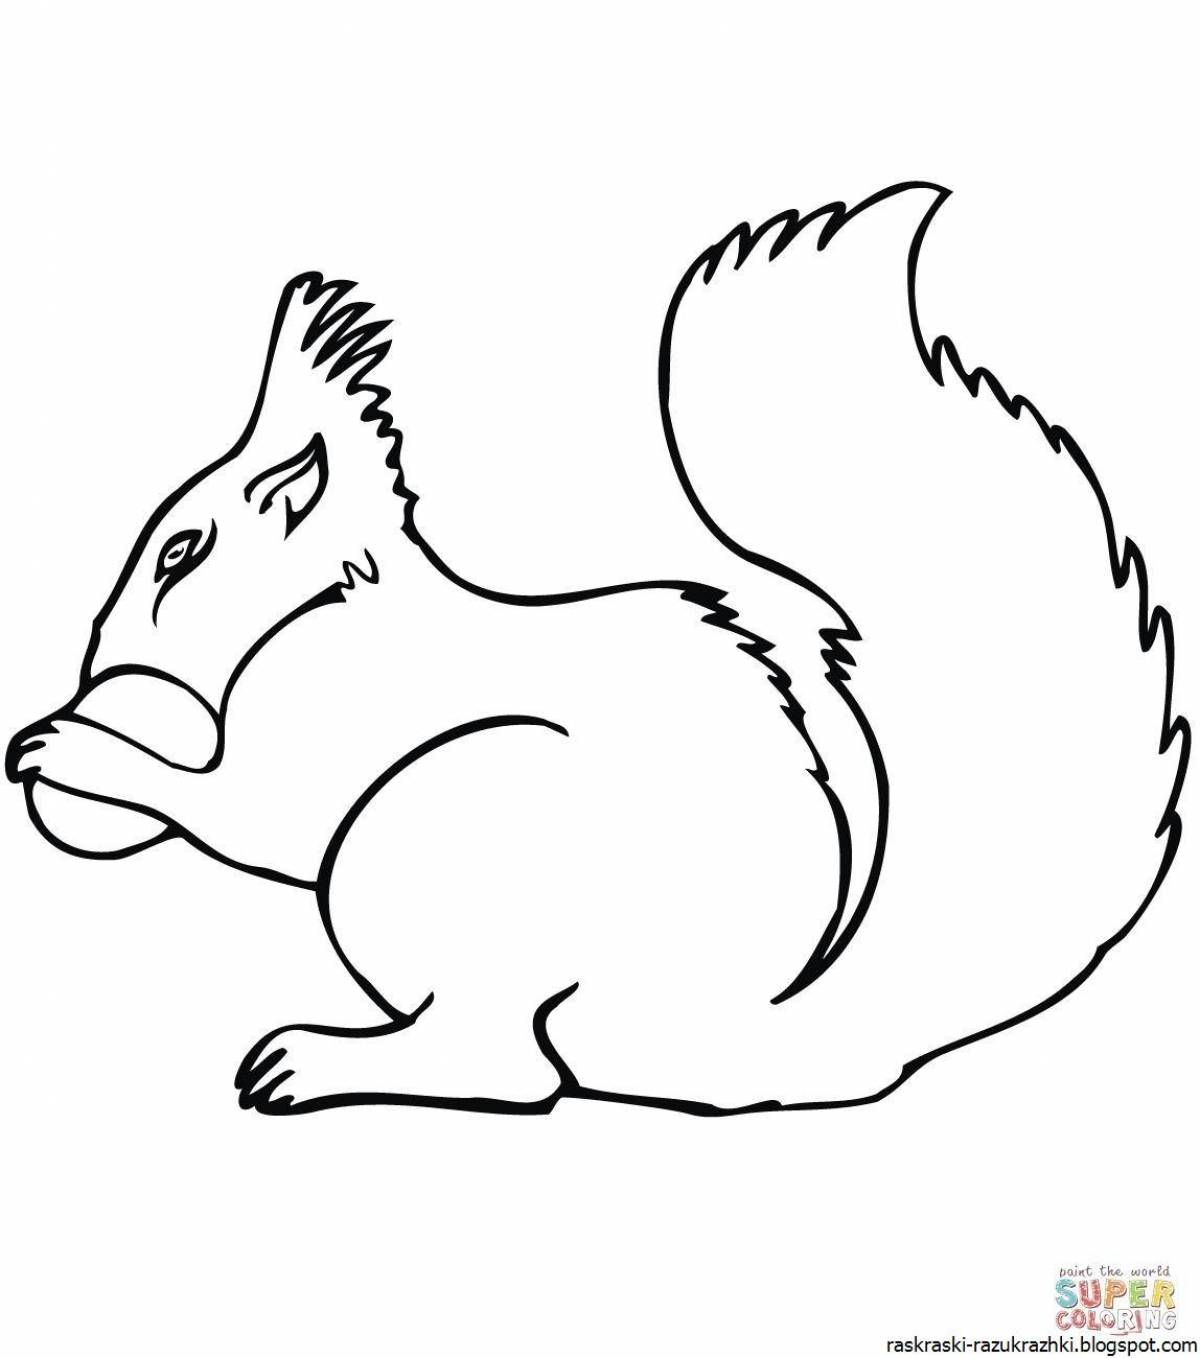 Fun squirrel coloring book for kids